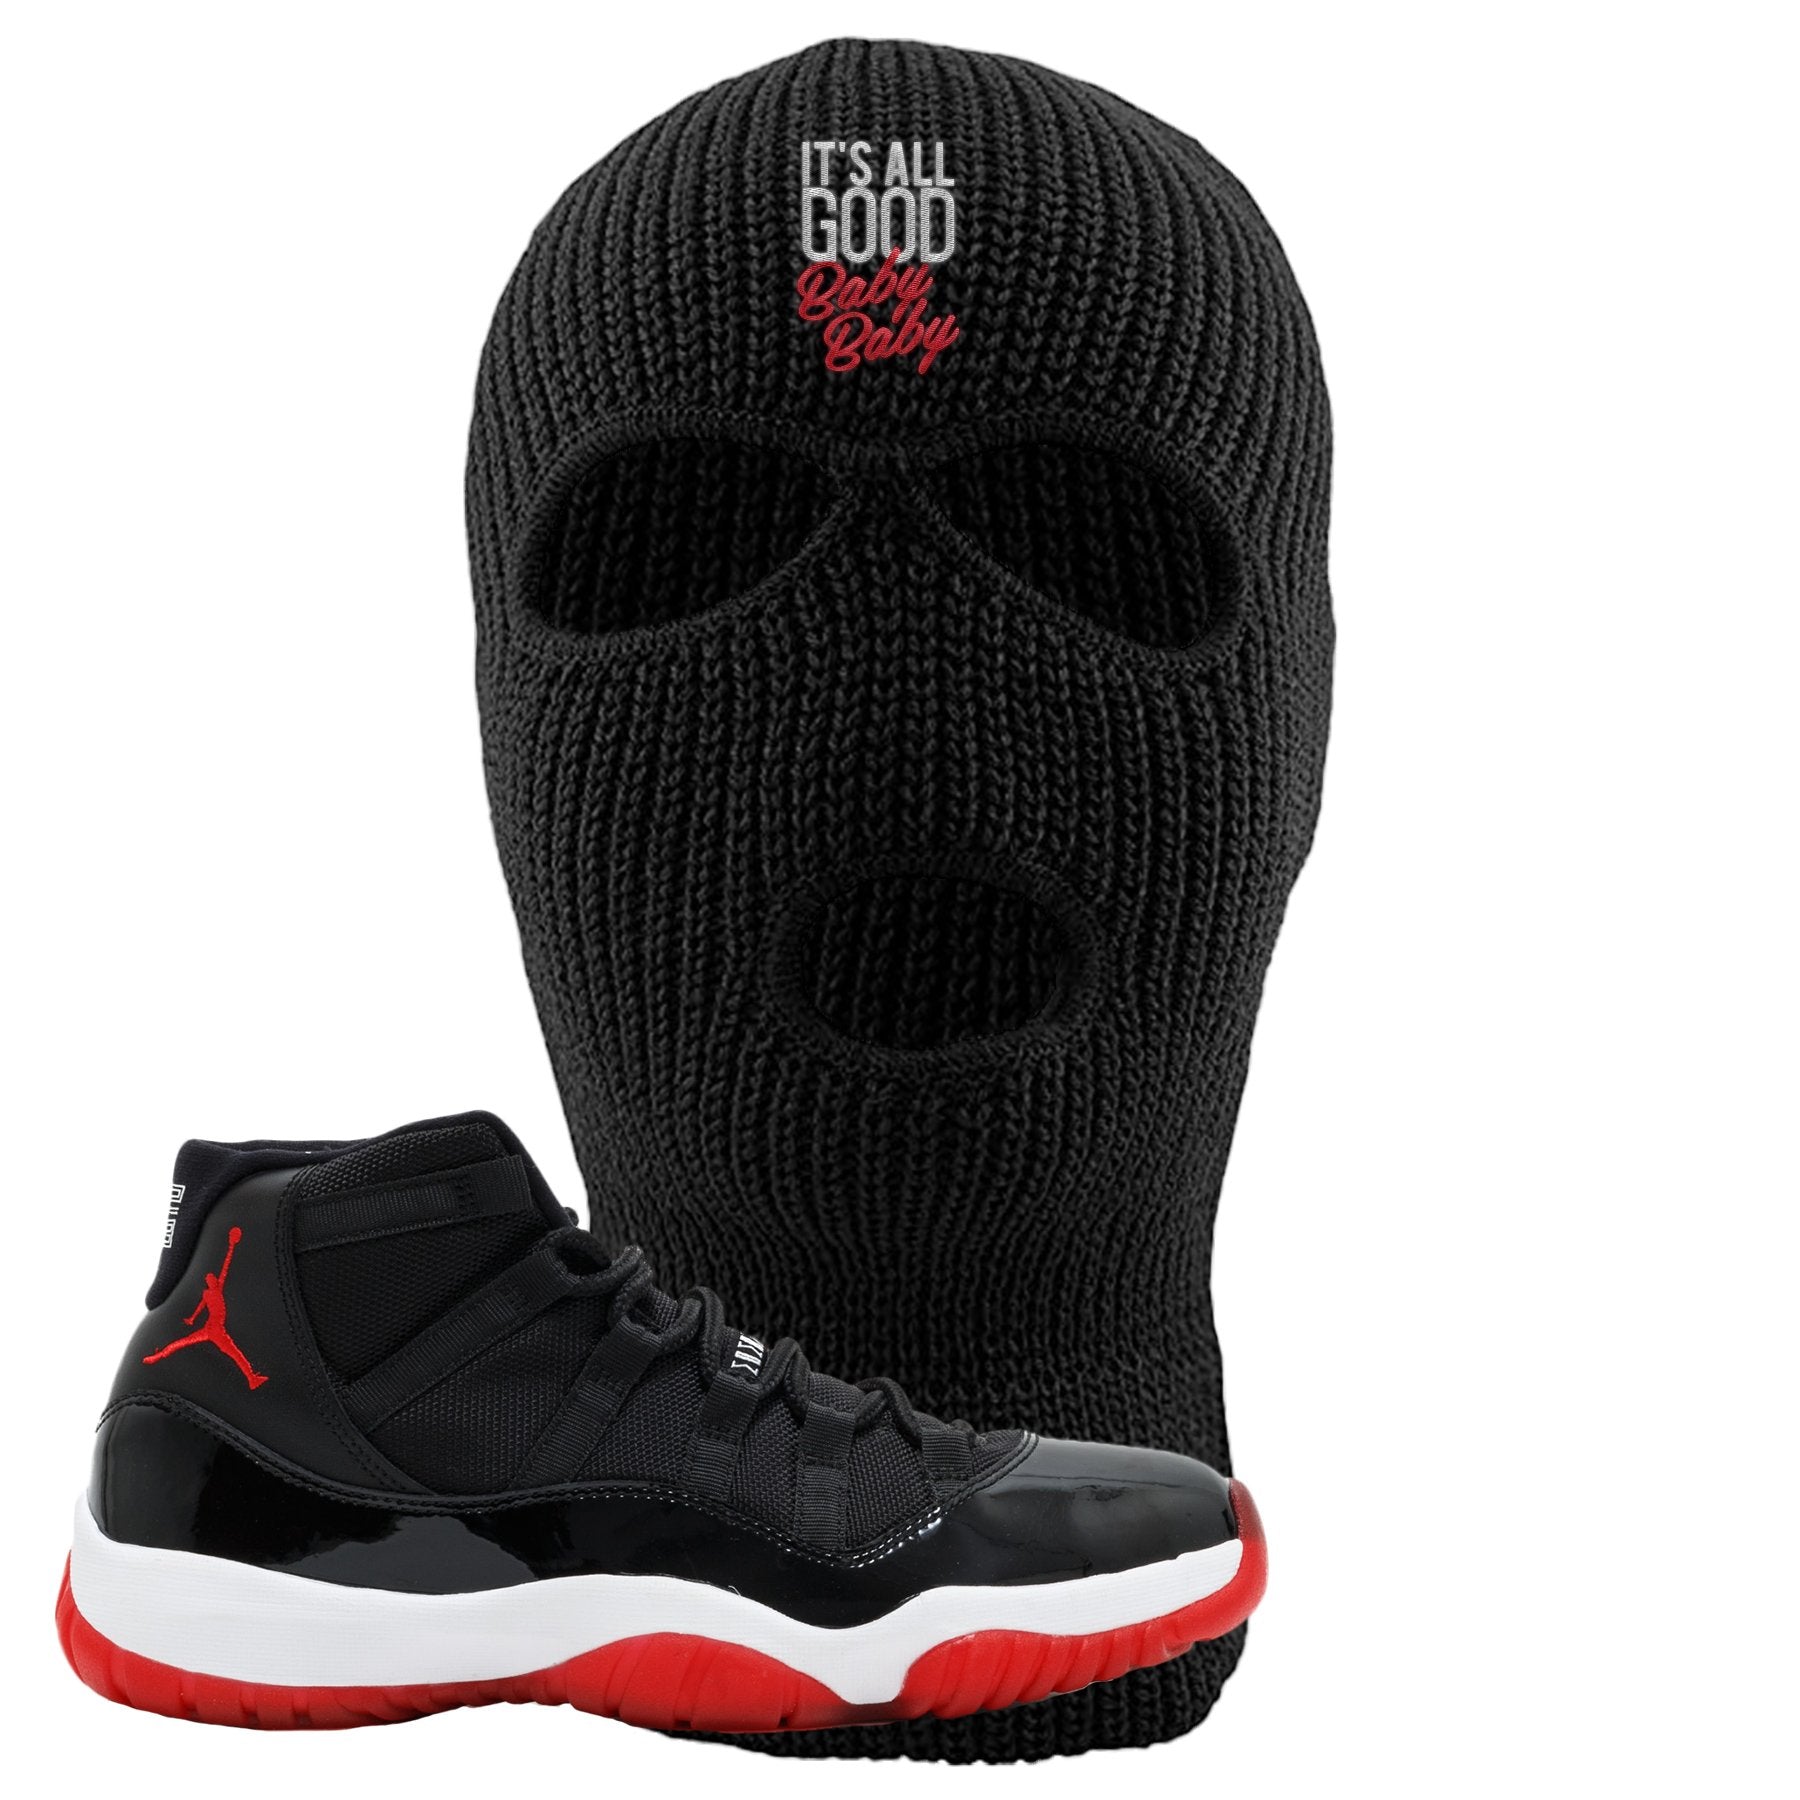 Jordan 11 Bred It's All Good Baby Baby Black Sneaker Hook Up Ski Mask